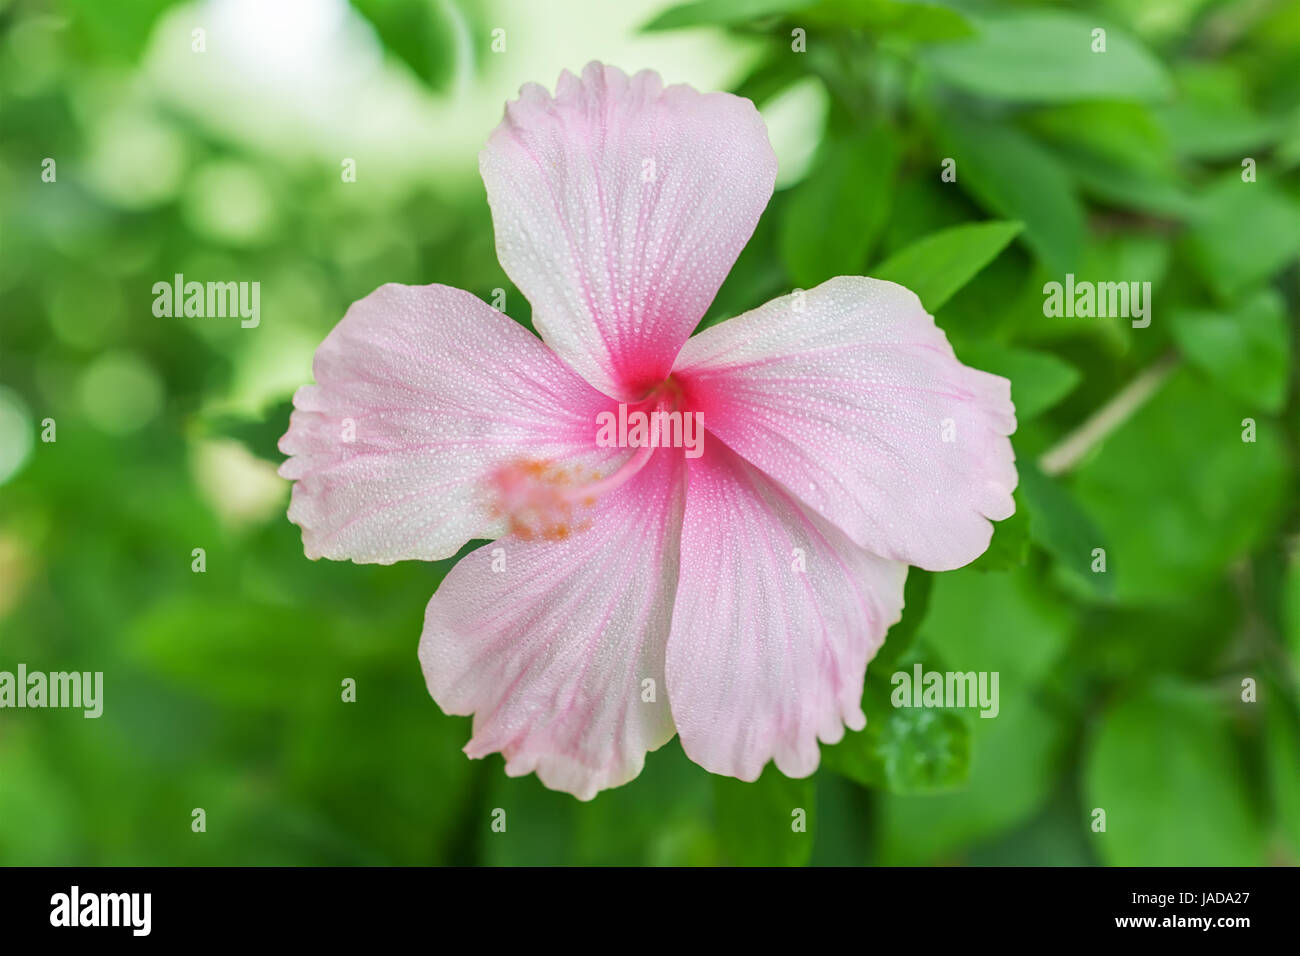 Rosa Hibiskus Blume auf grüne Bokeh Hintergrund Stockfoto